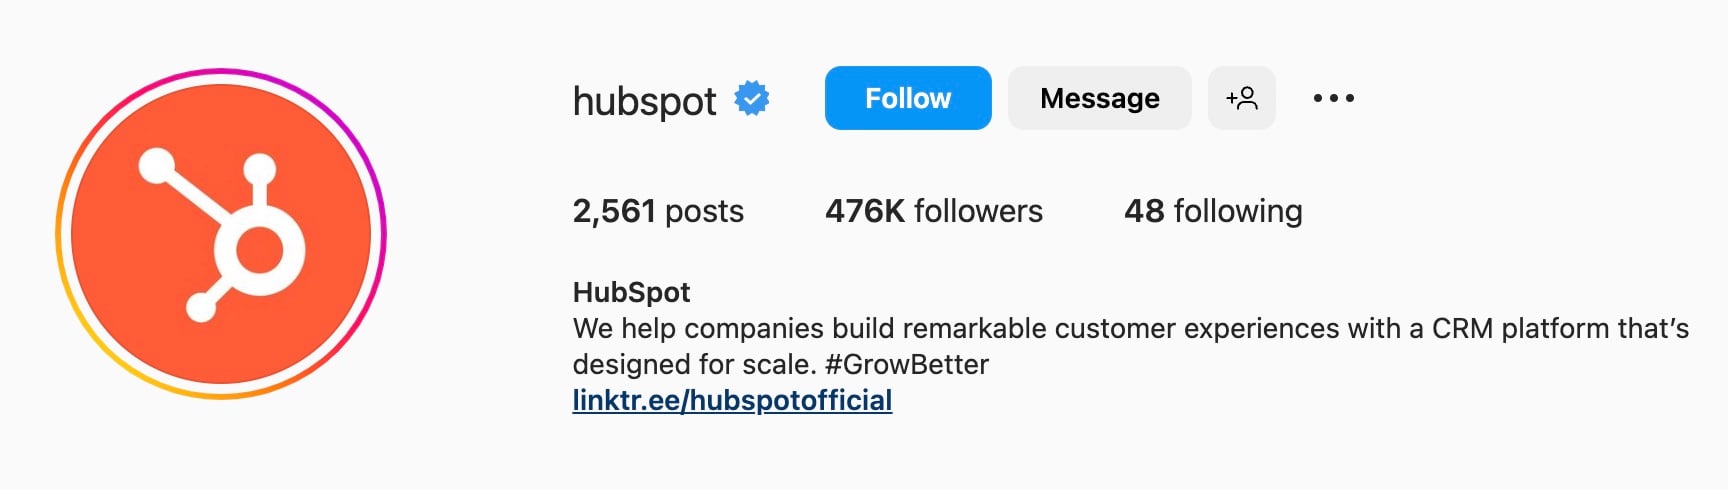 Instagram bio ideas for SaaS businesses, hubspot